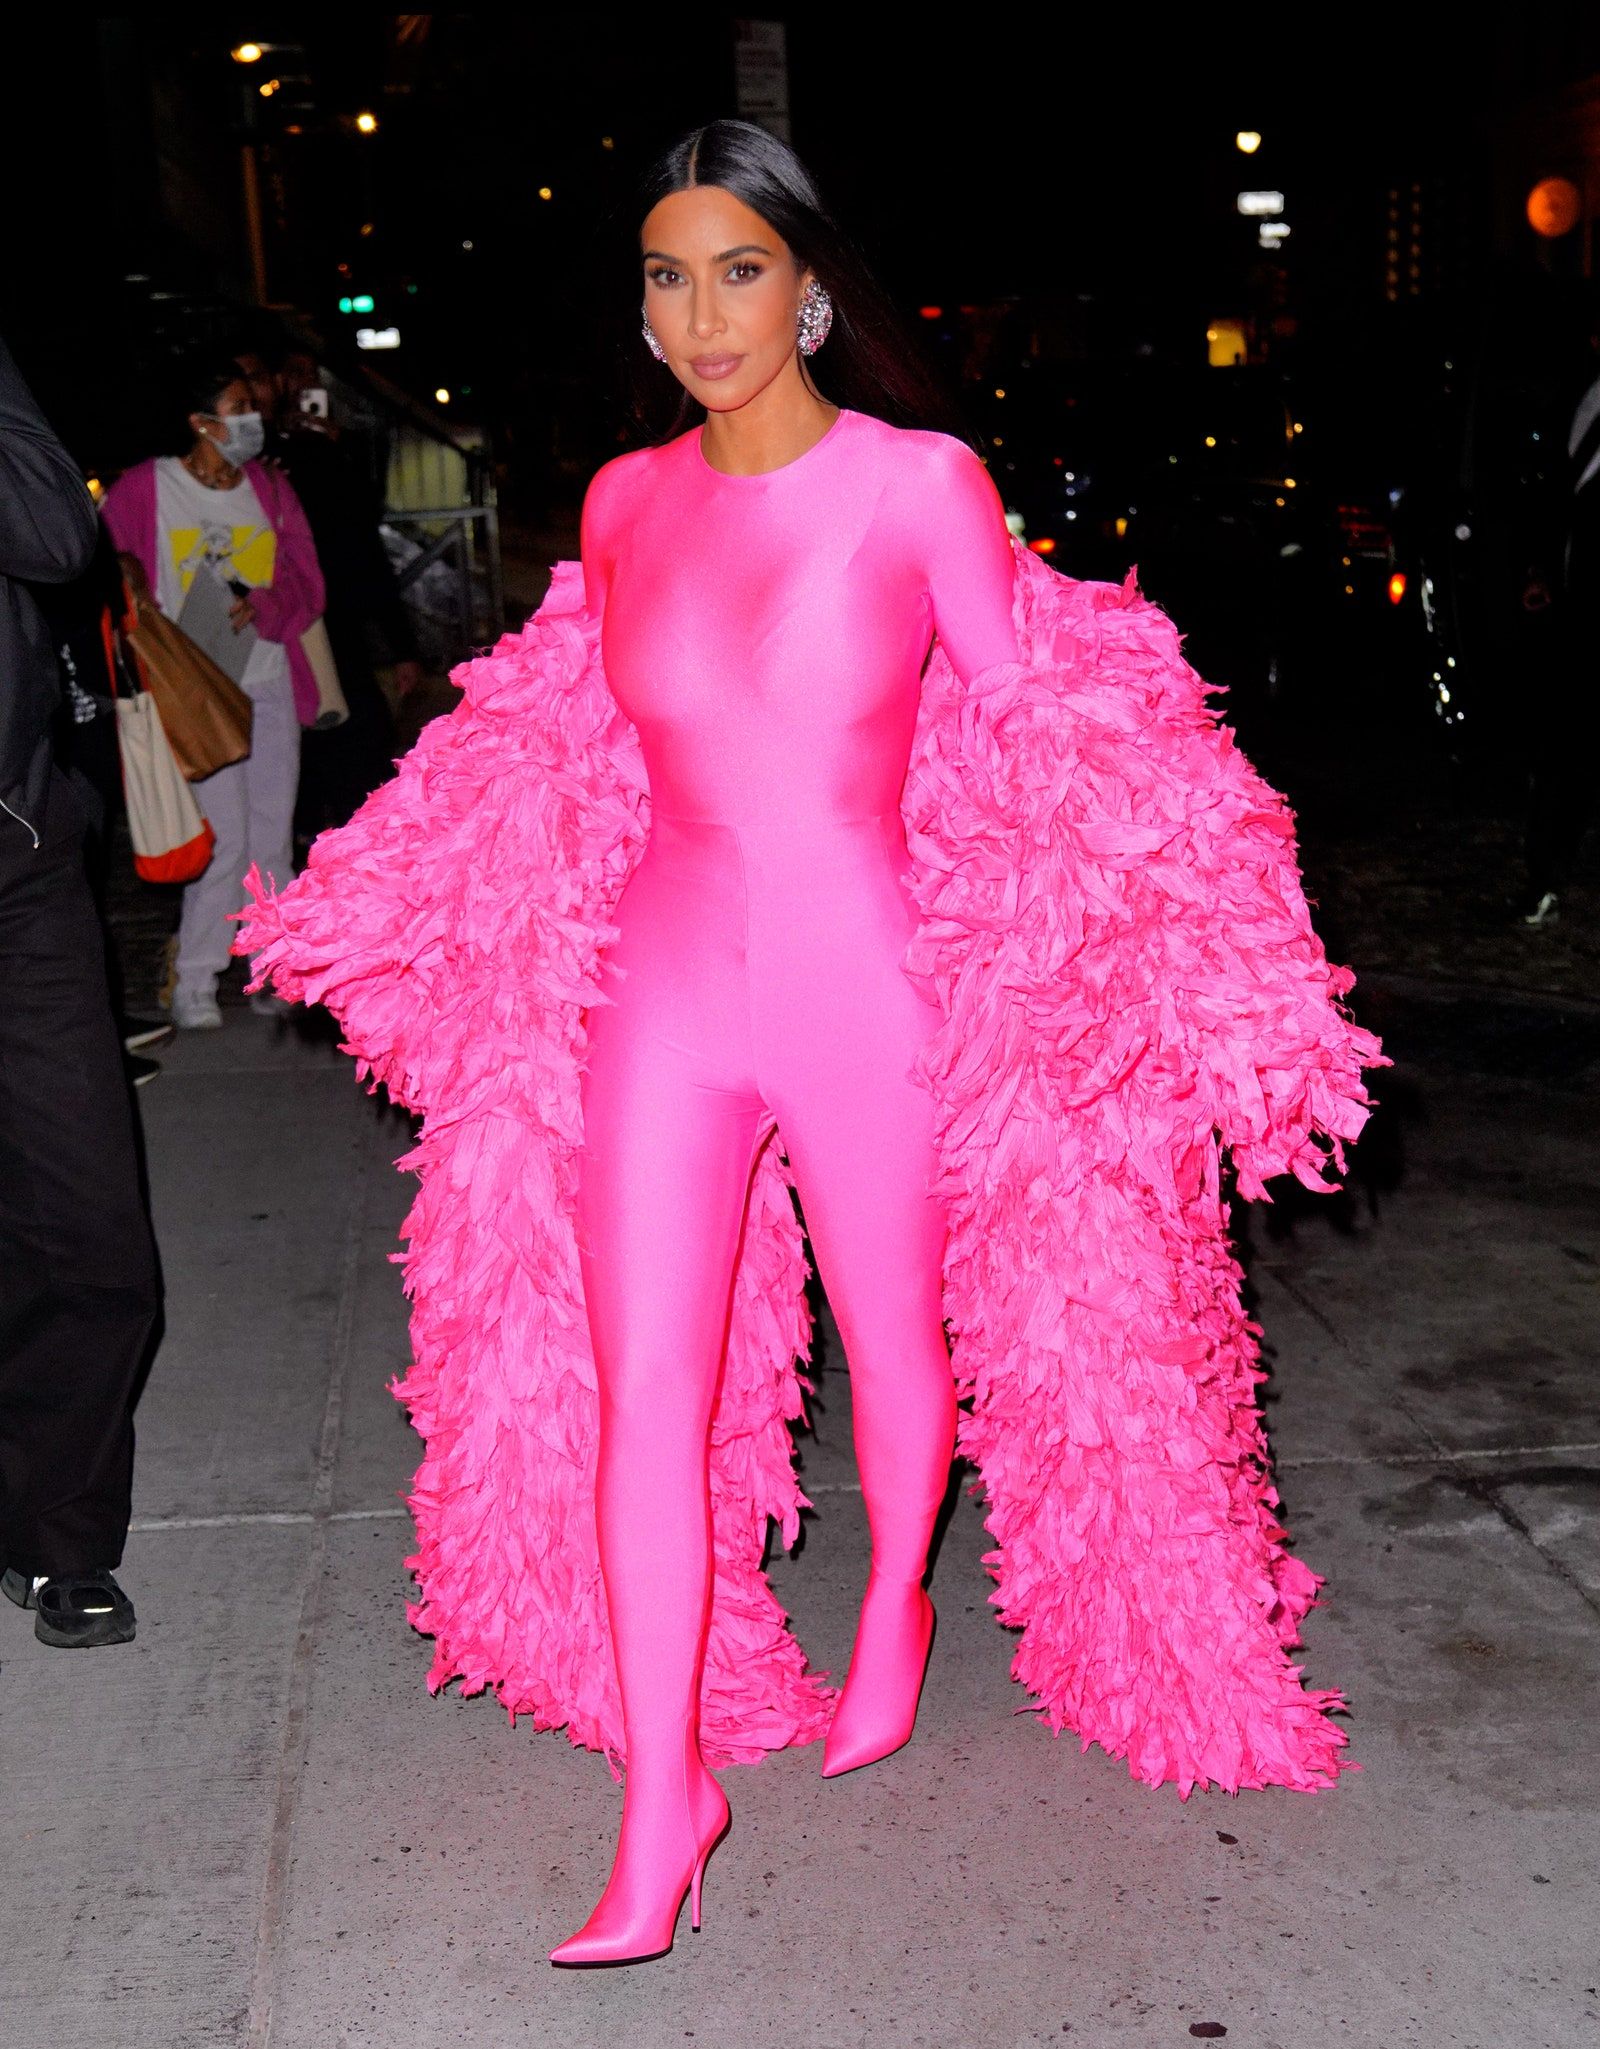 Gaya Modis Seleb Hollywood Kenakan Outfit Warna Hot Pink yang Trendi